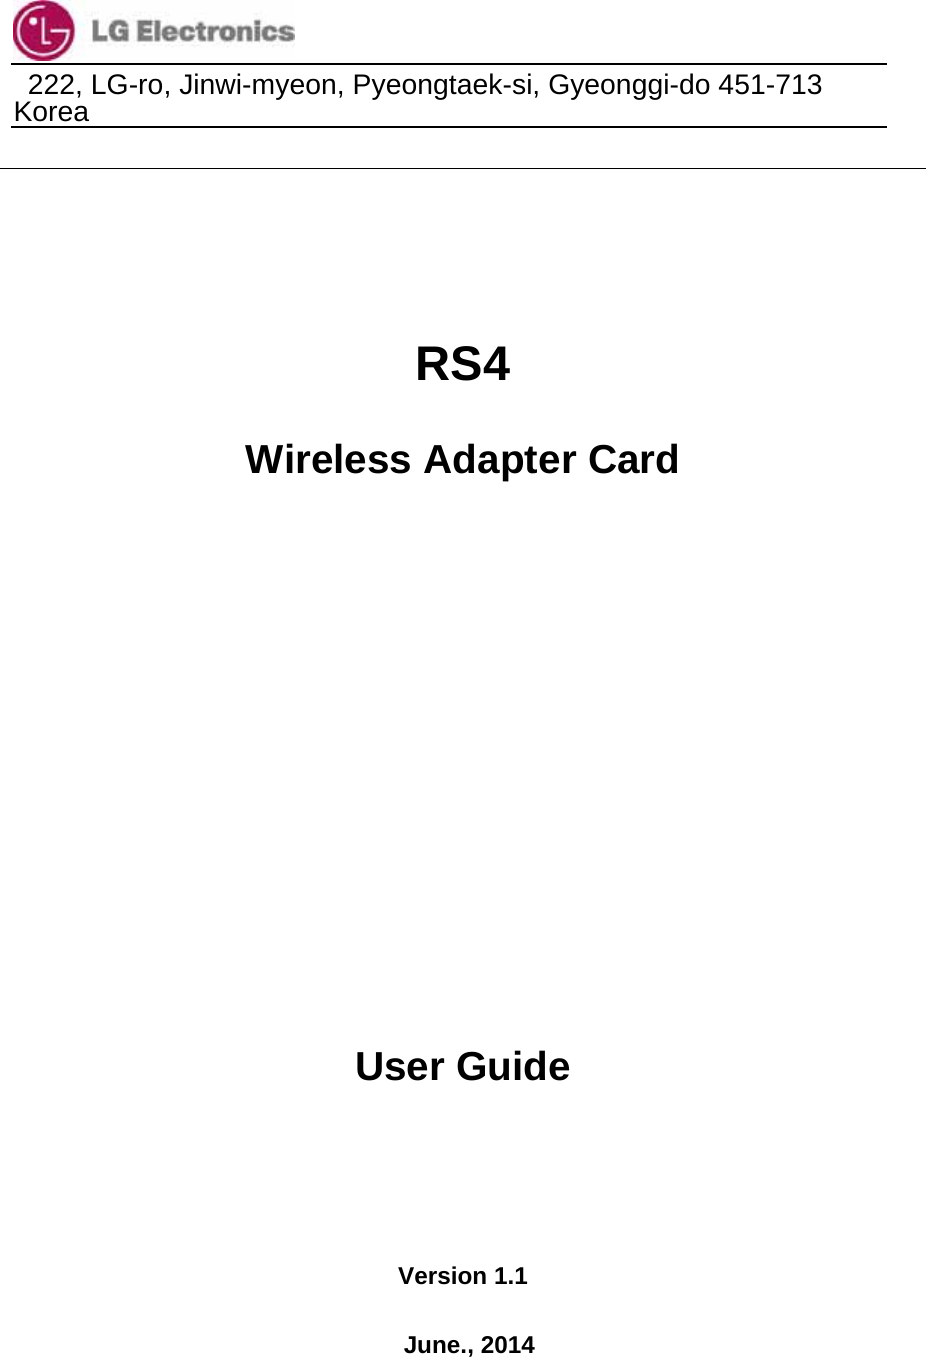                                  222, LG-ro, Jinwi-myeon, Pyeongtaek-si, Gyeonggi-do 451-713 Korea       RS4 Wireless Adapter Card         User Guide   Version 1.1  June., 2014 